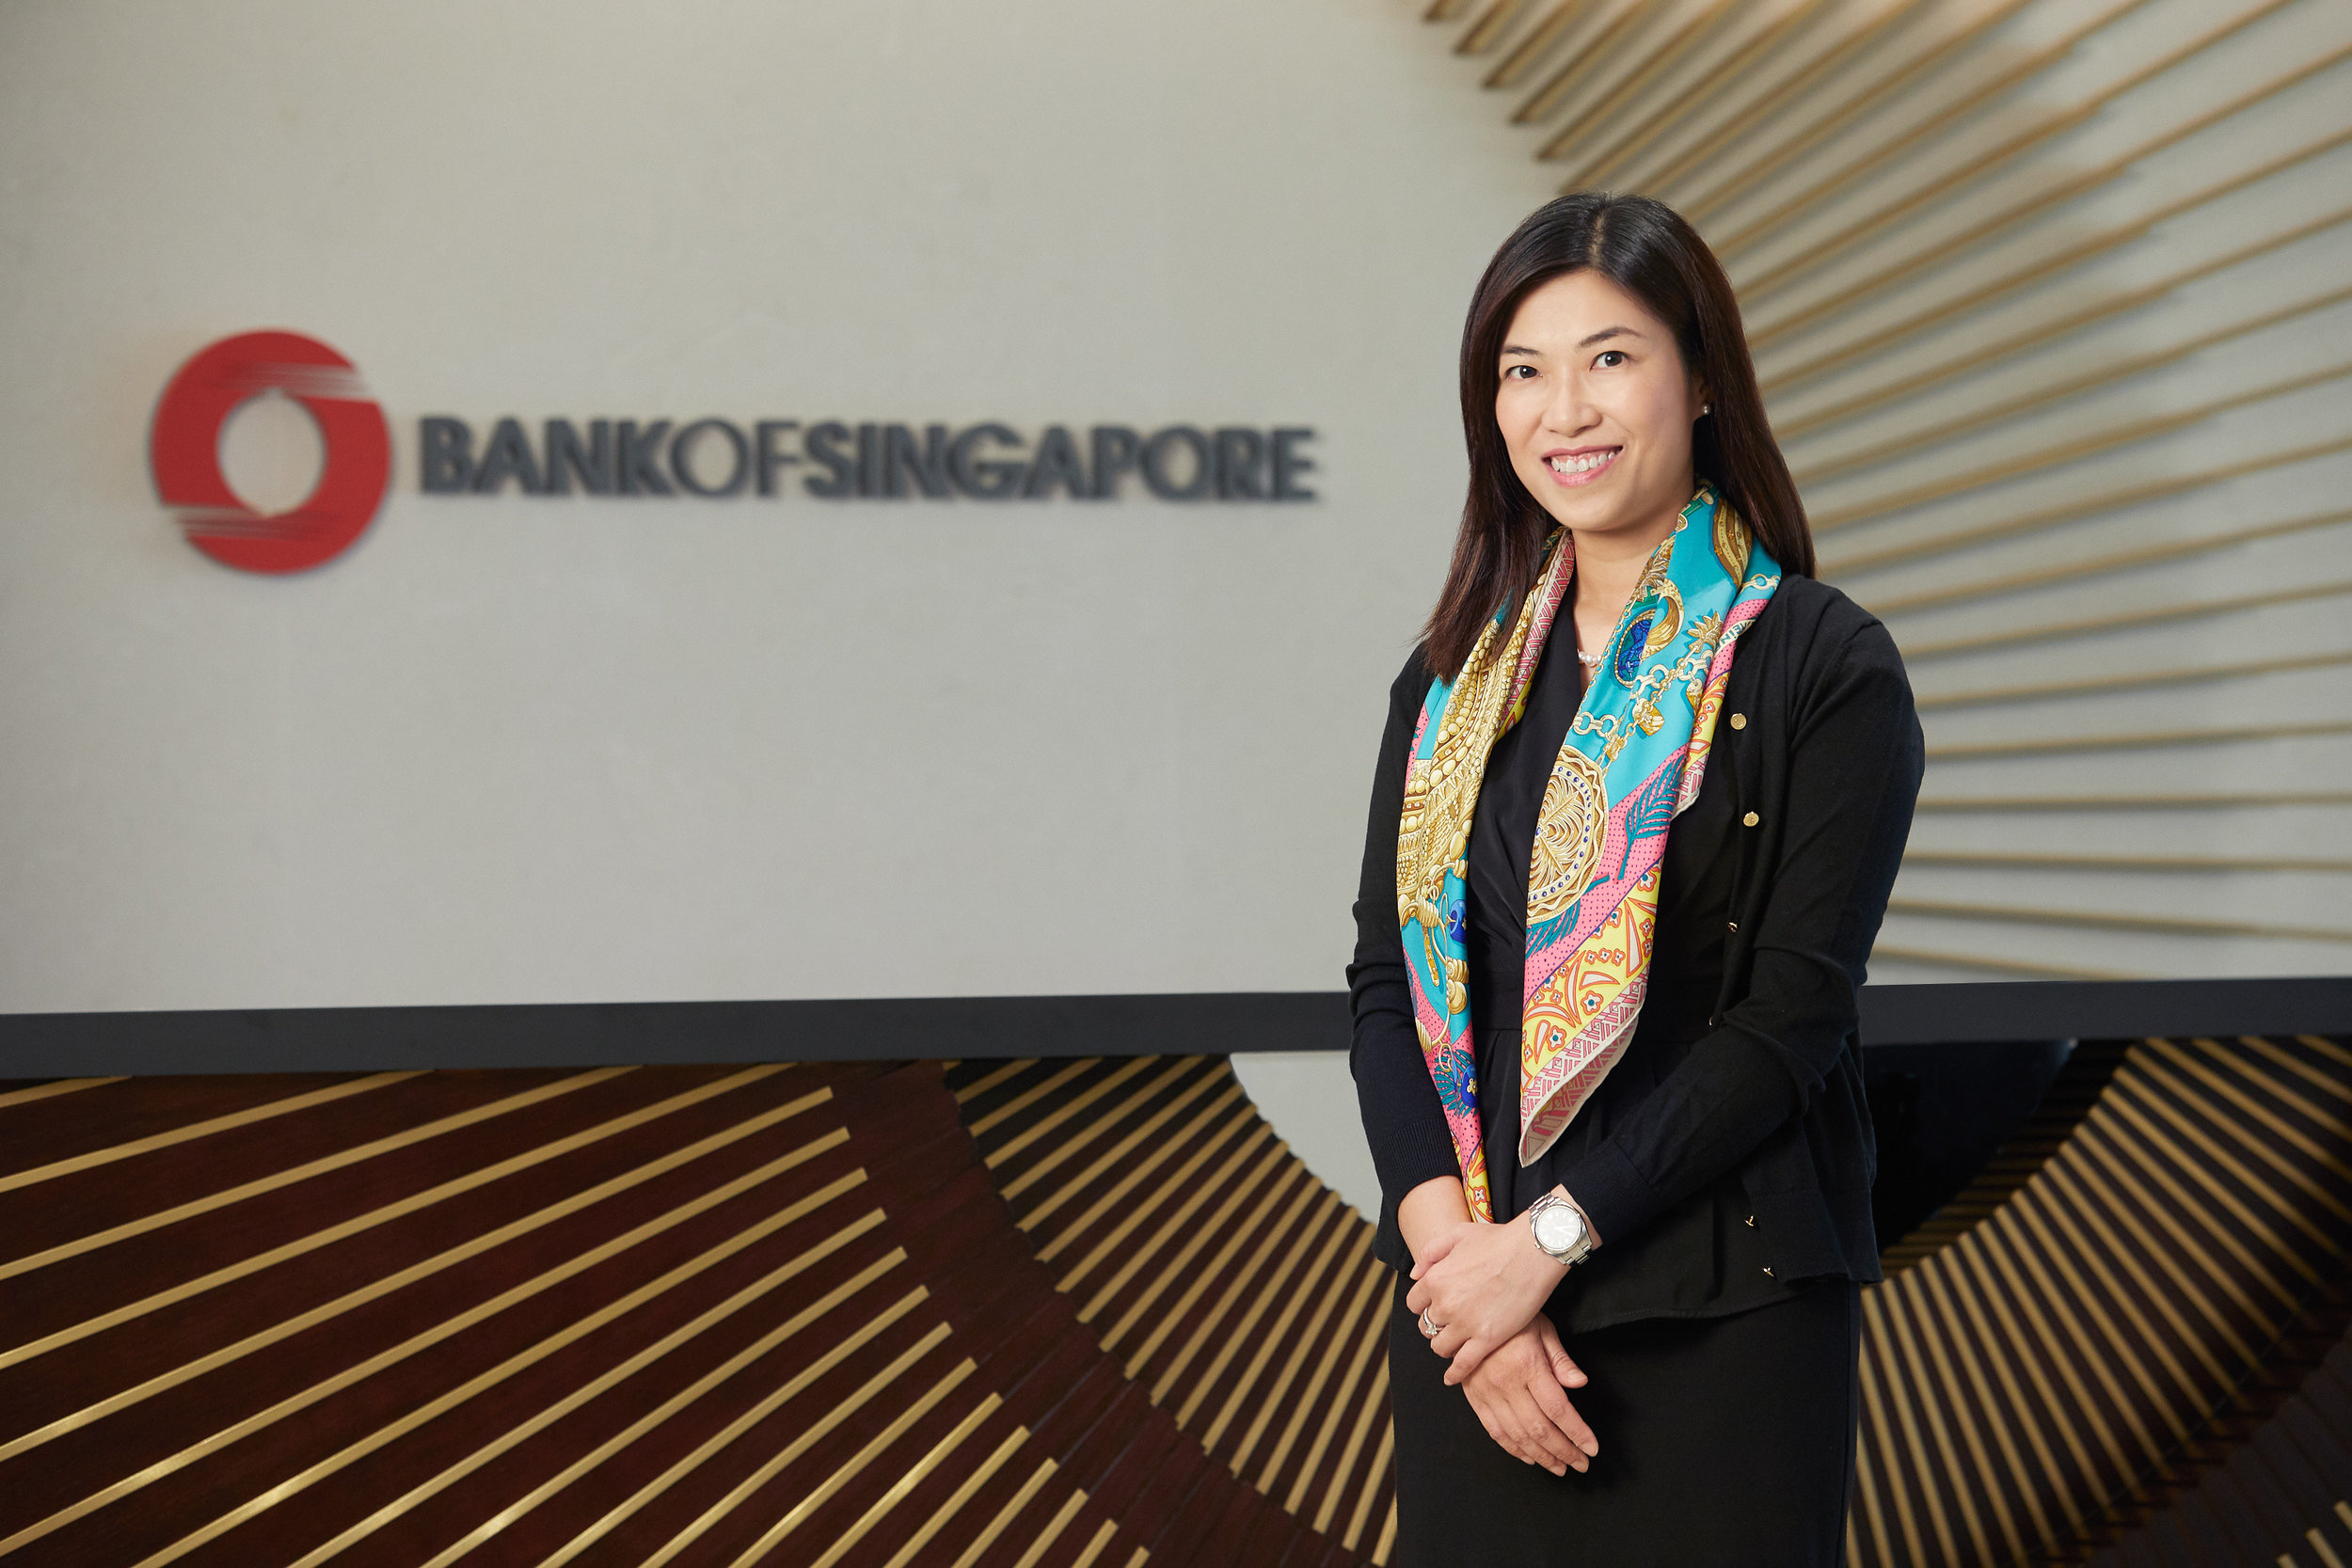 Bank-of-singapore_Potrait_Michael CW Chiu_8.jpg